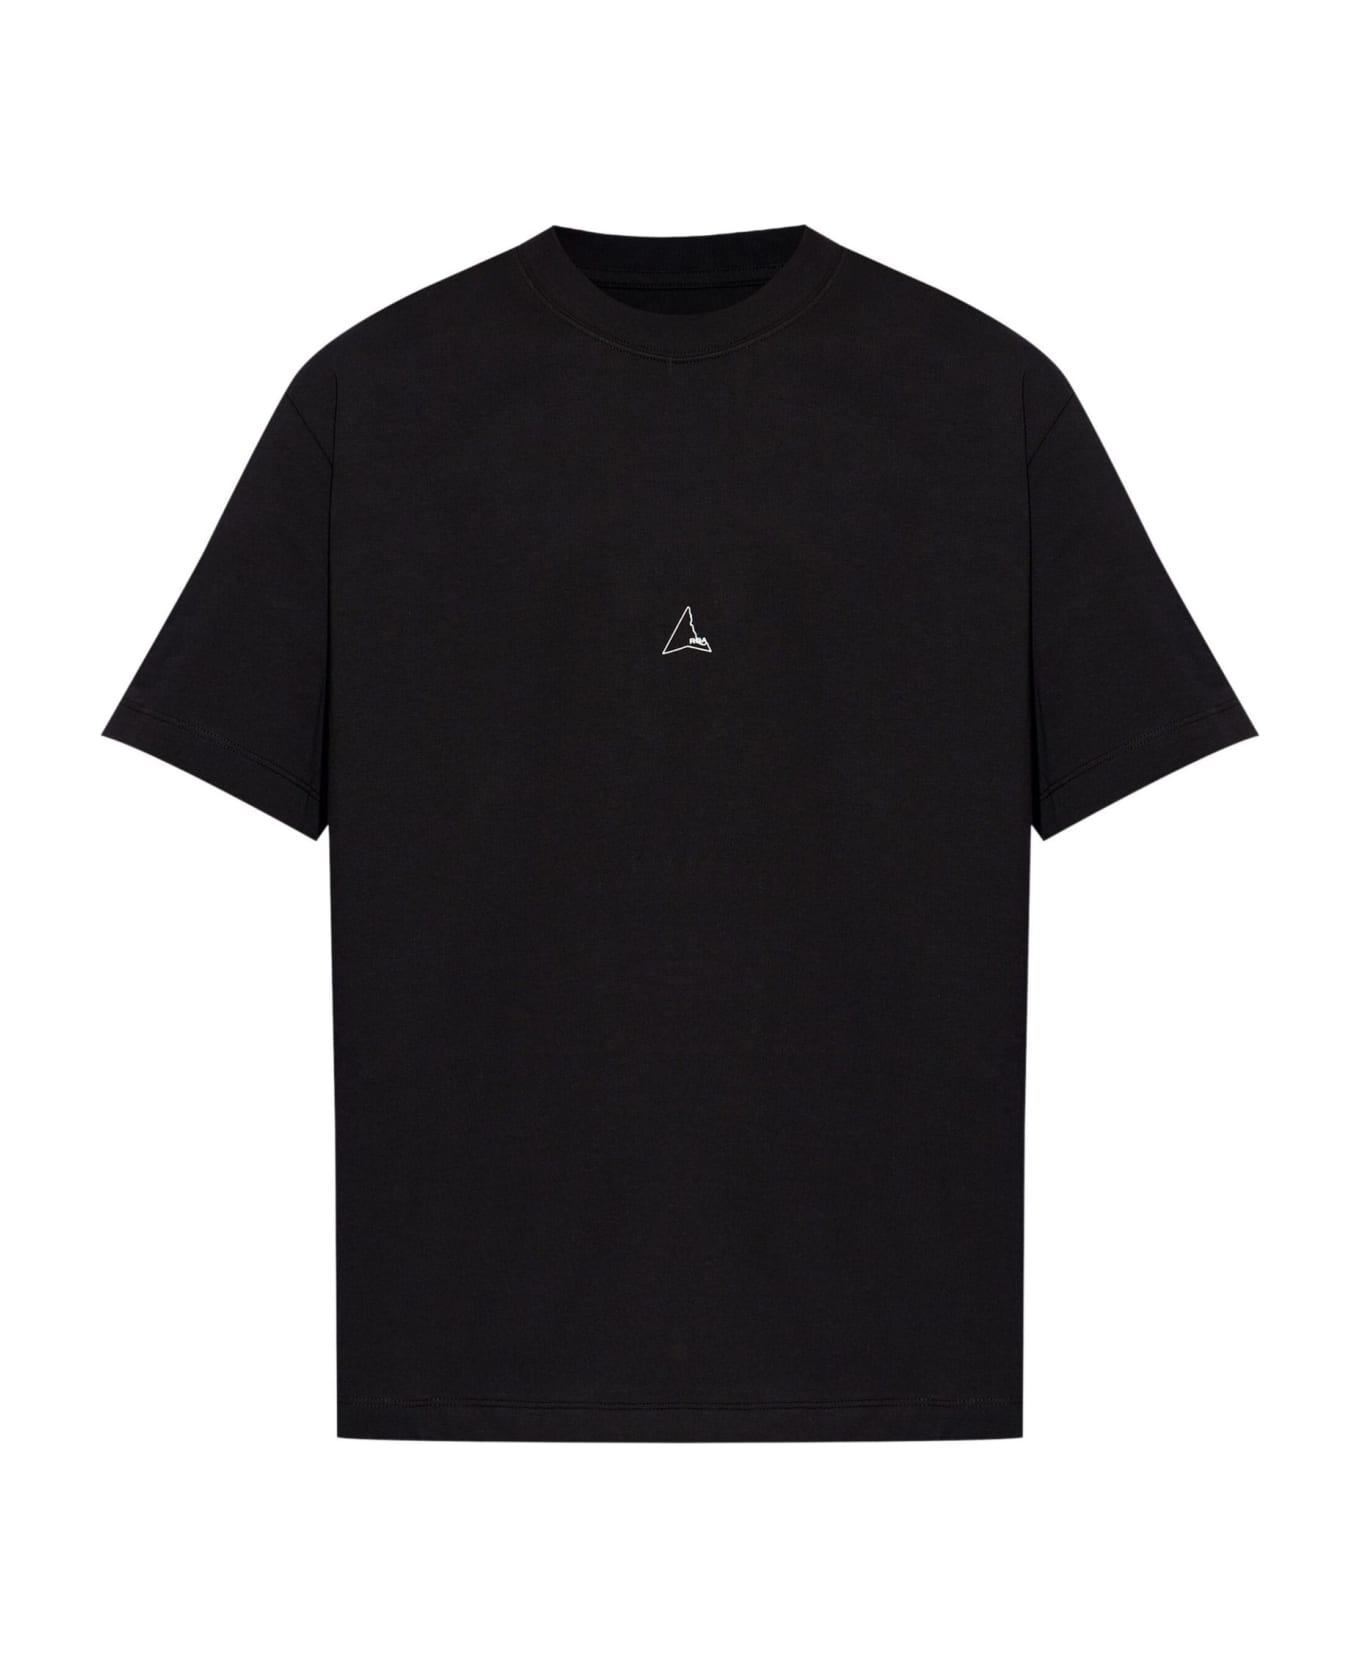 ROA Apparel T-shirts And Polos Black - Black